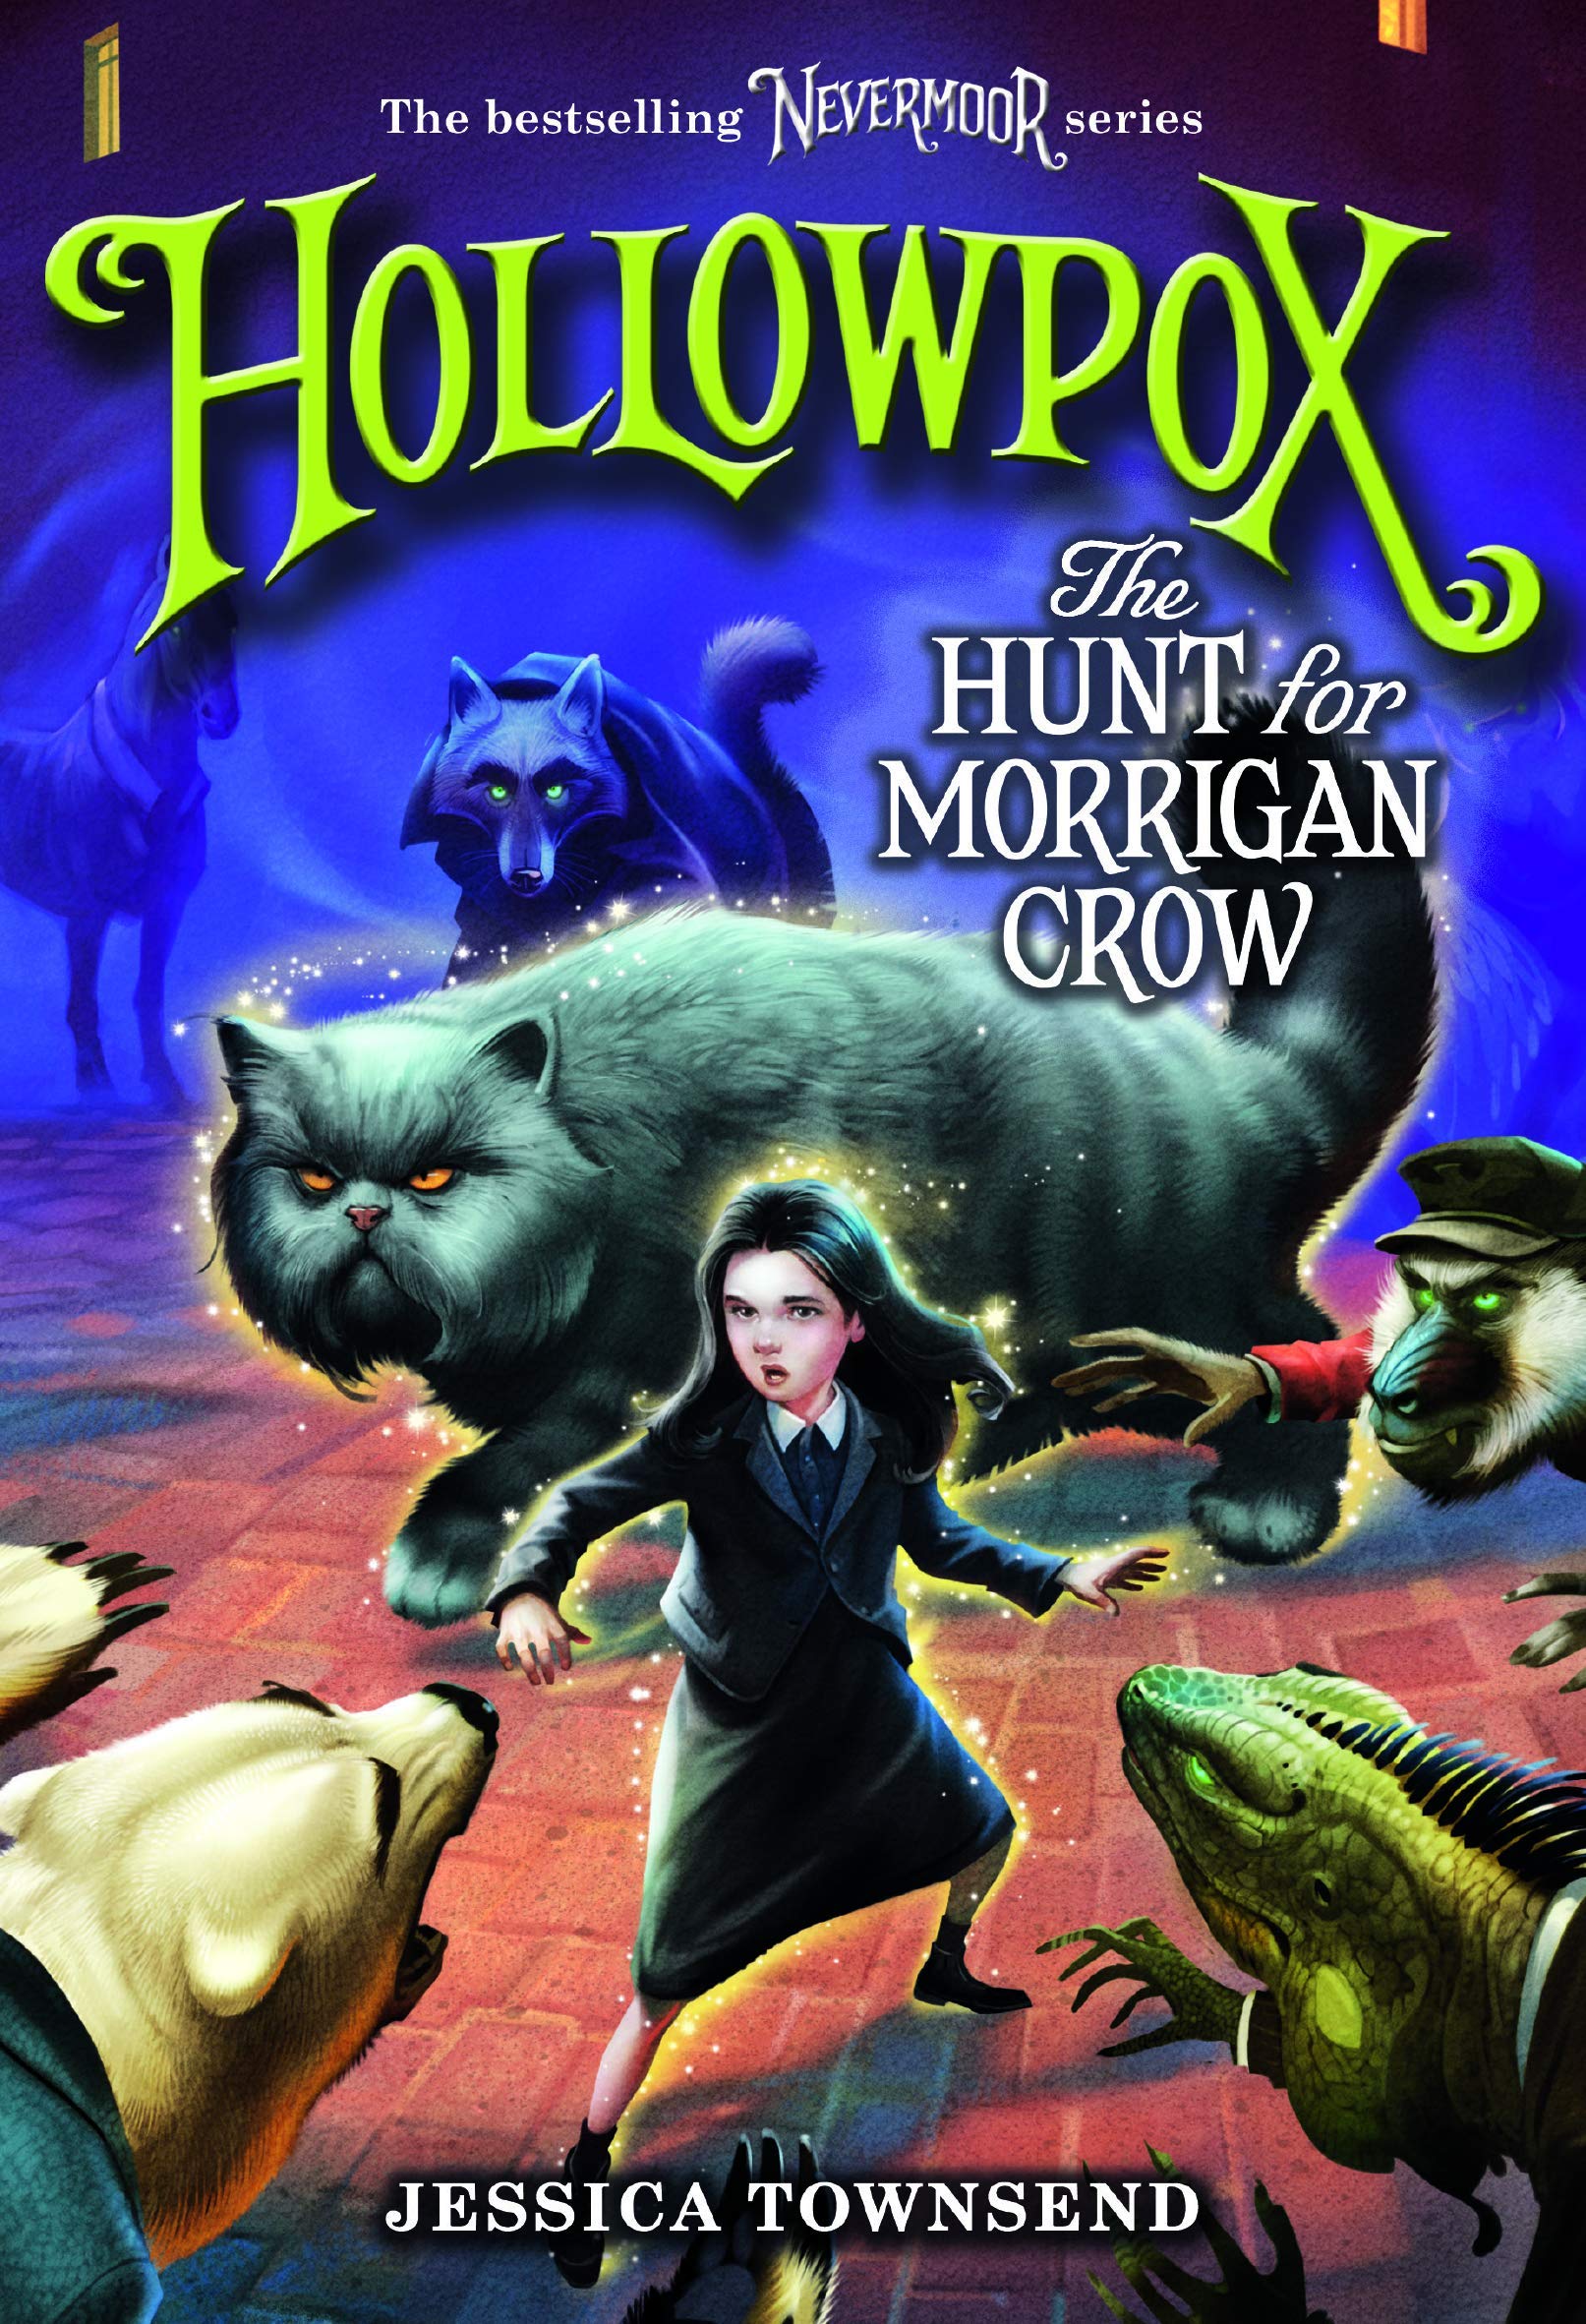 Hollowpox the Hunt for Morrigan Crow